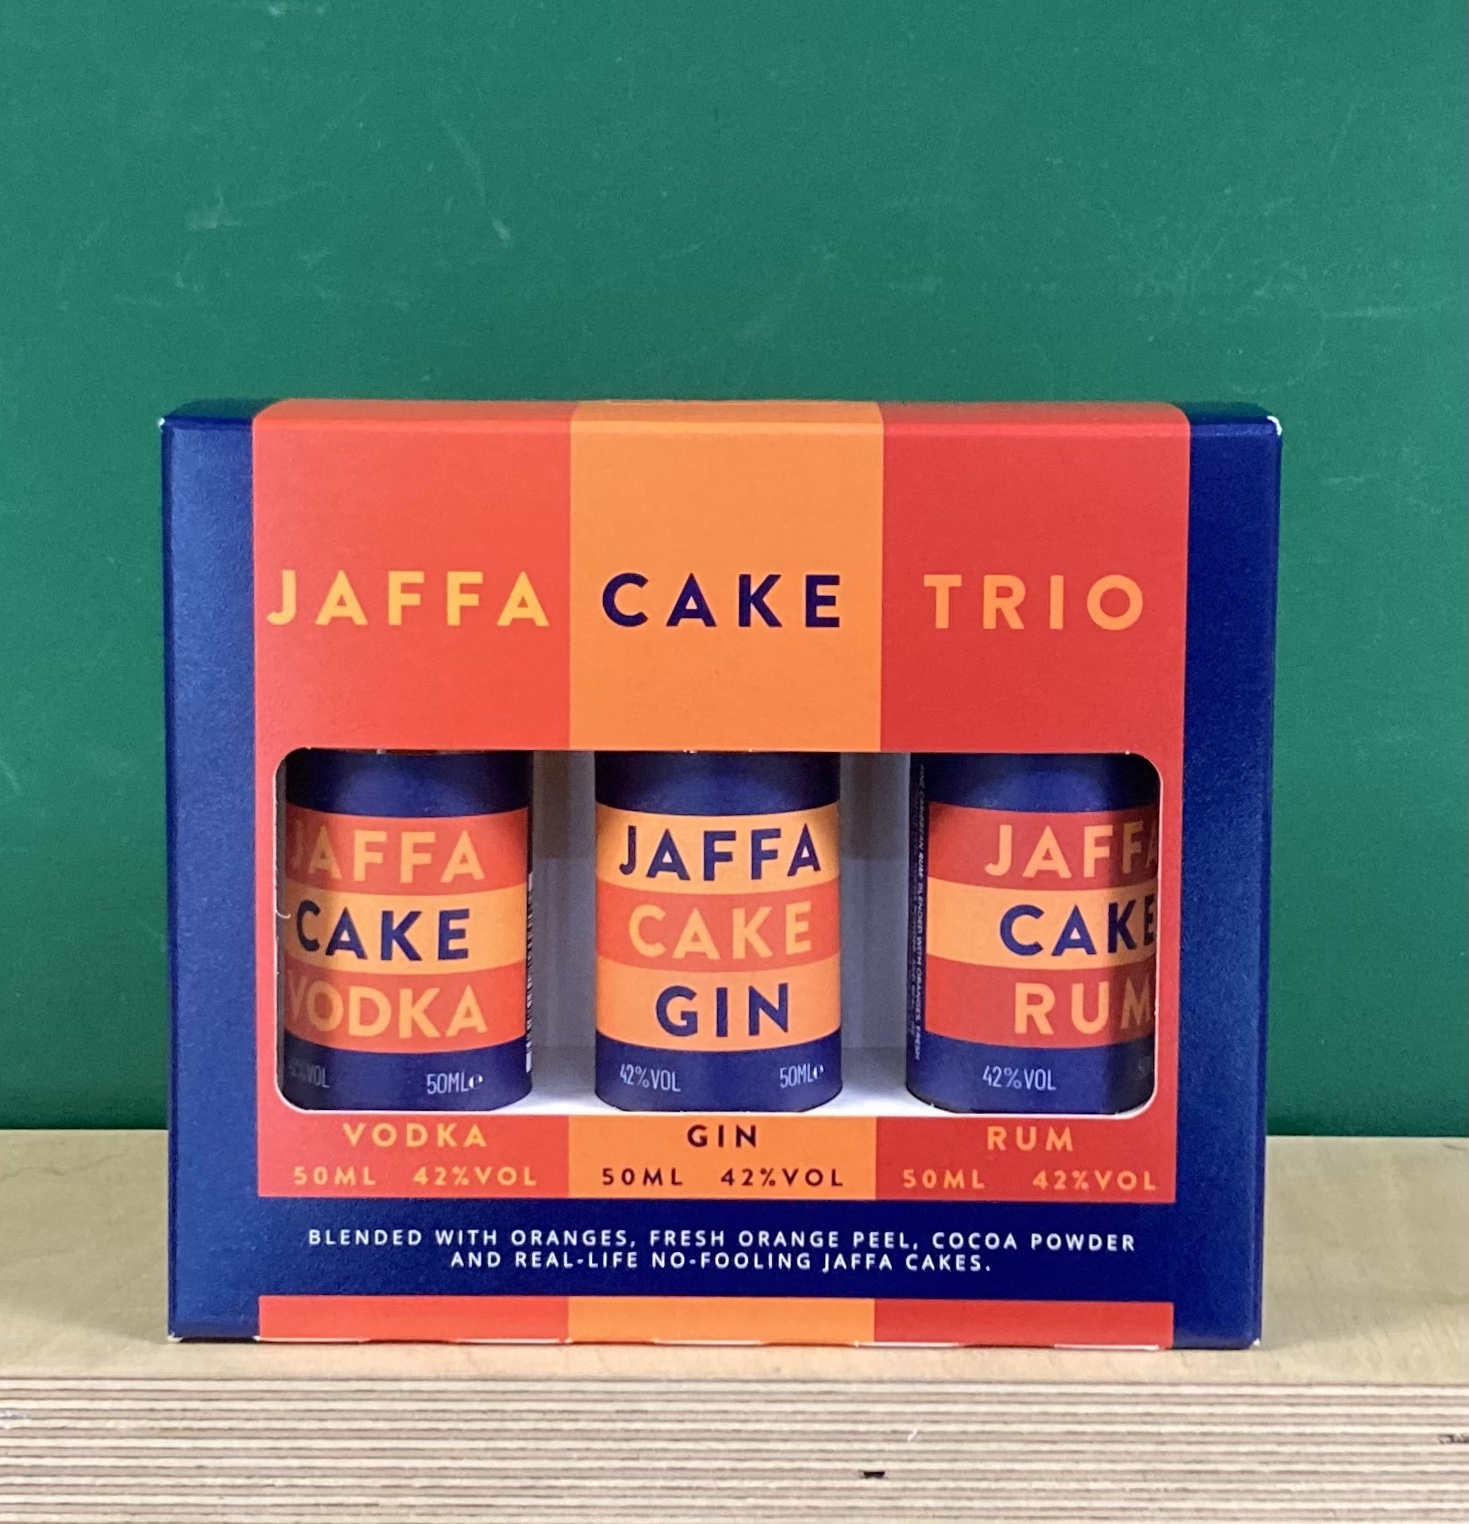 Jaffa Cake Trio Gift Set